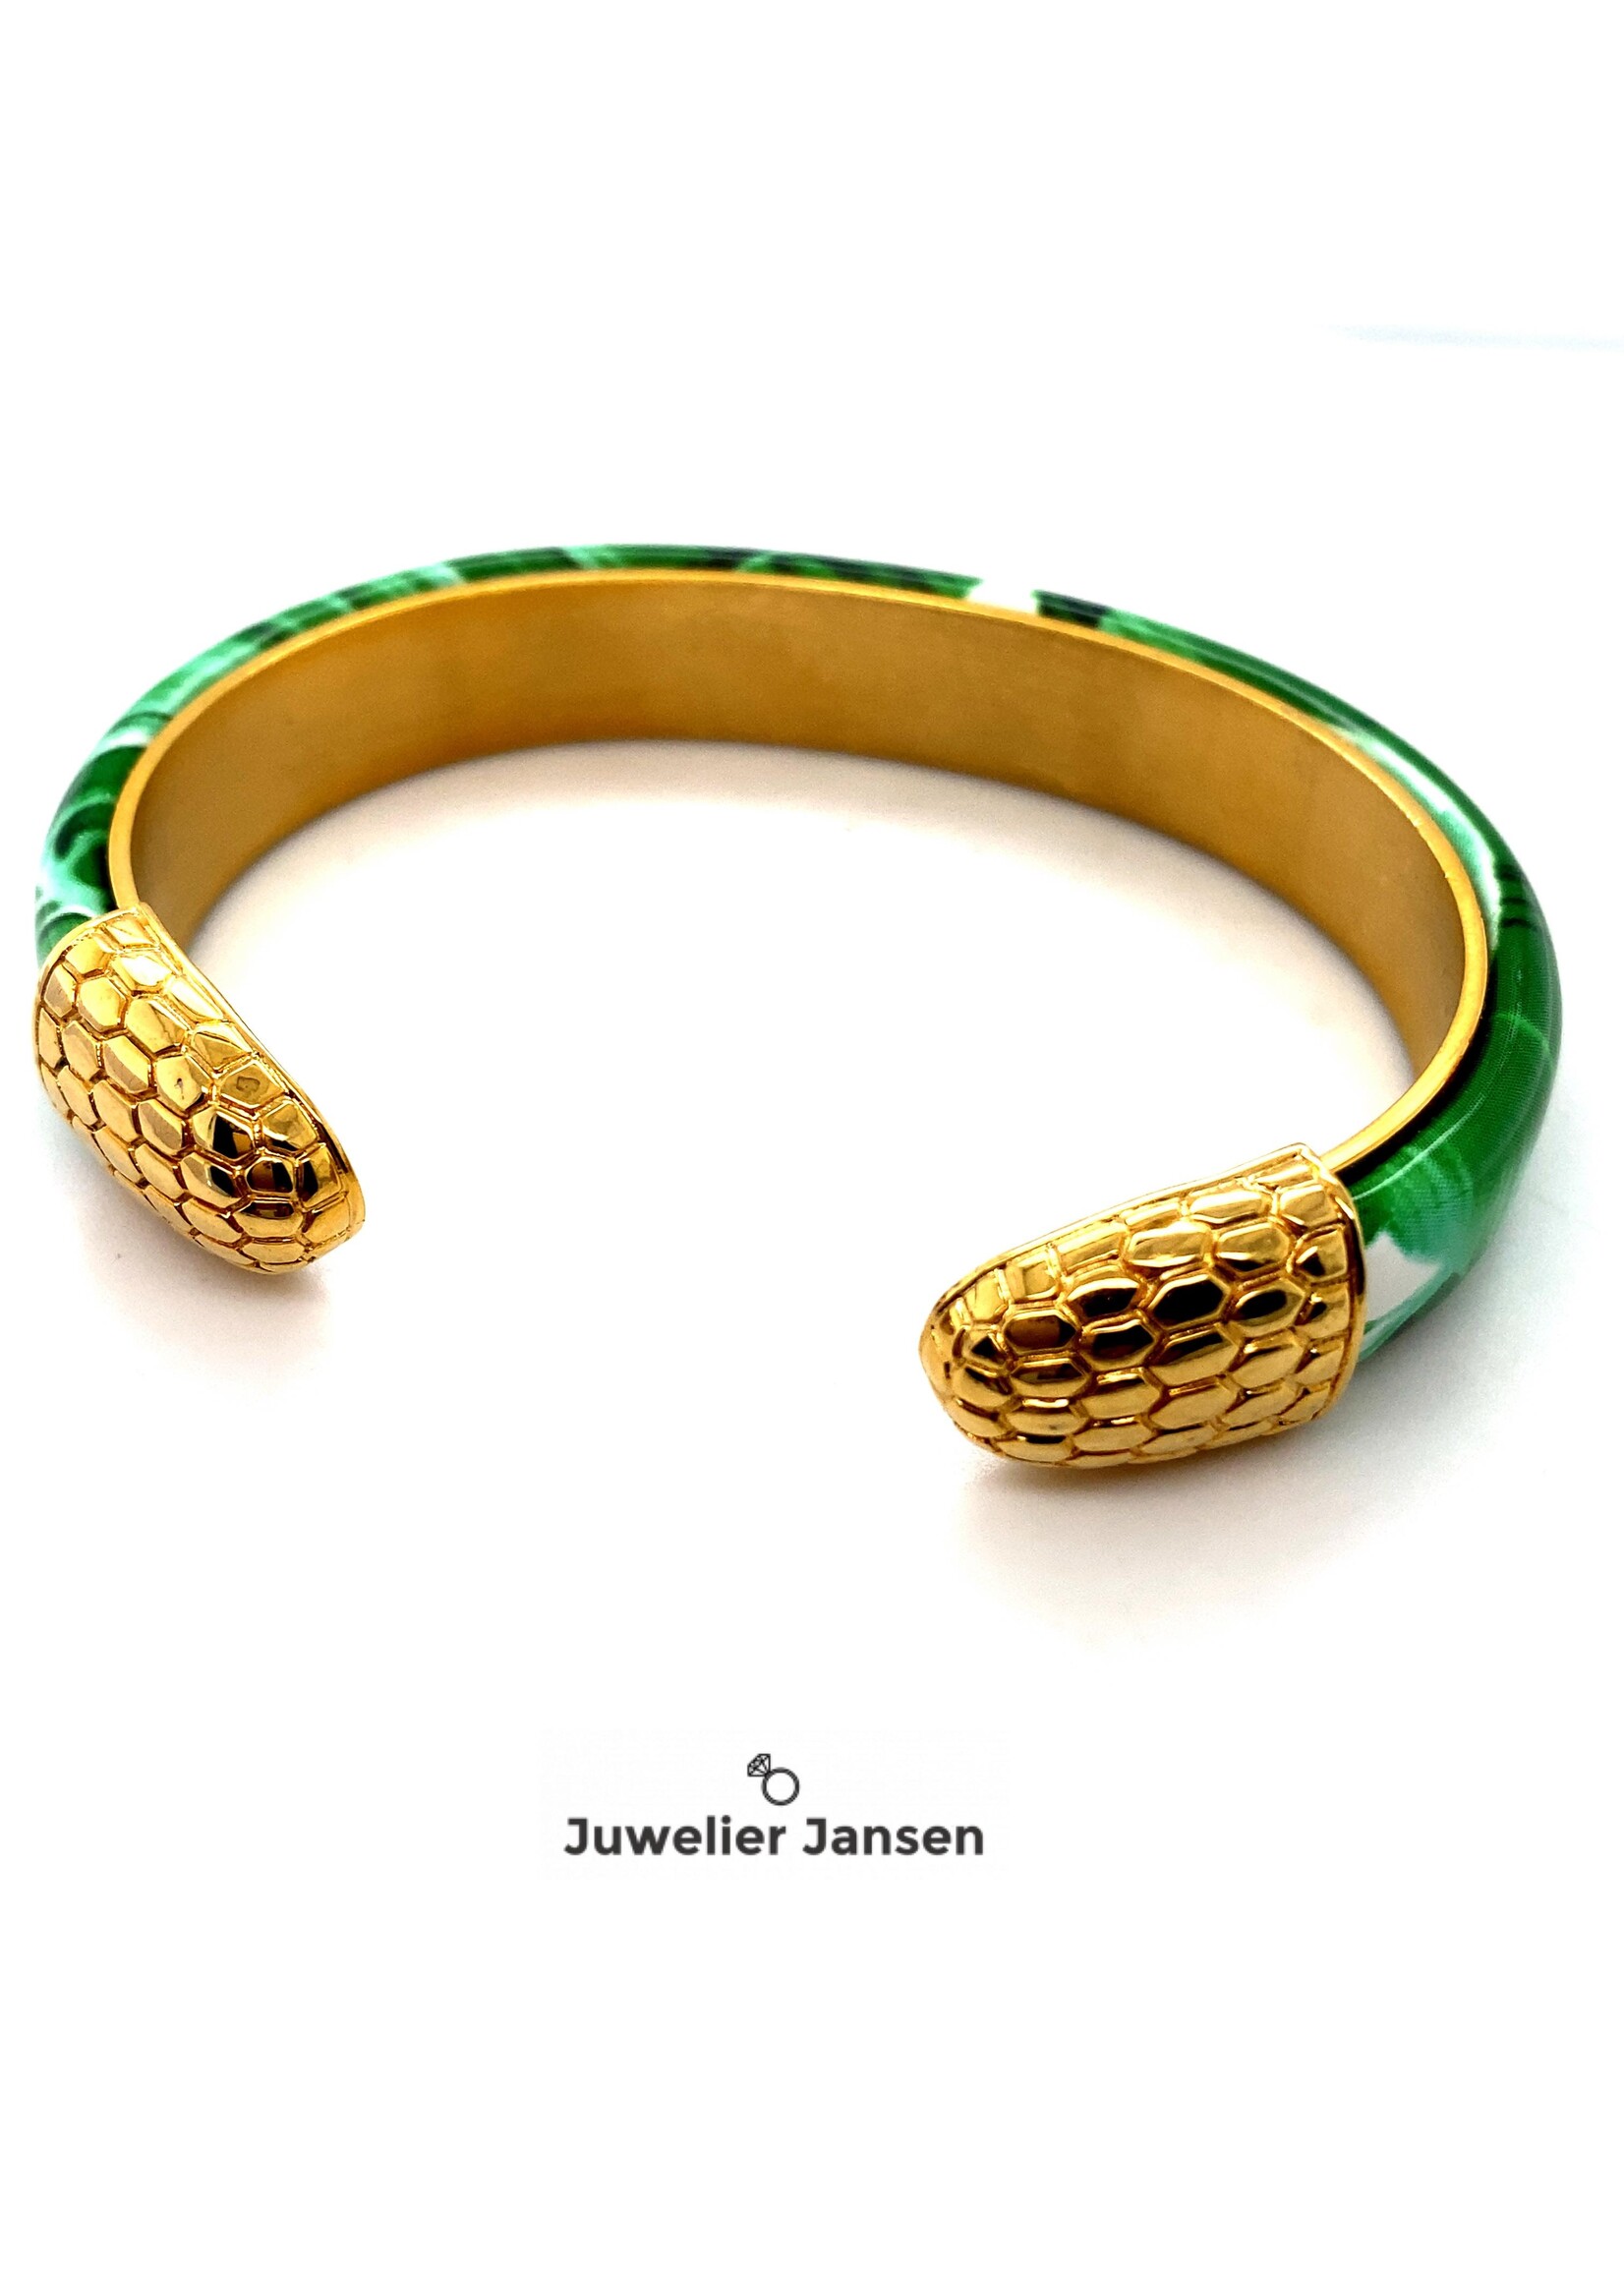 julie dans Juli Dans bracelet bangle groen goud